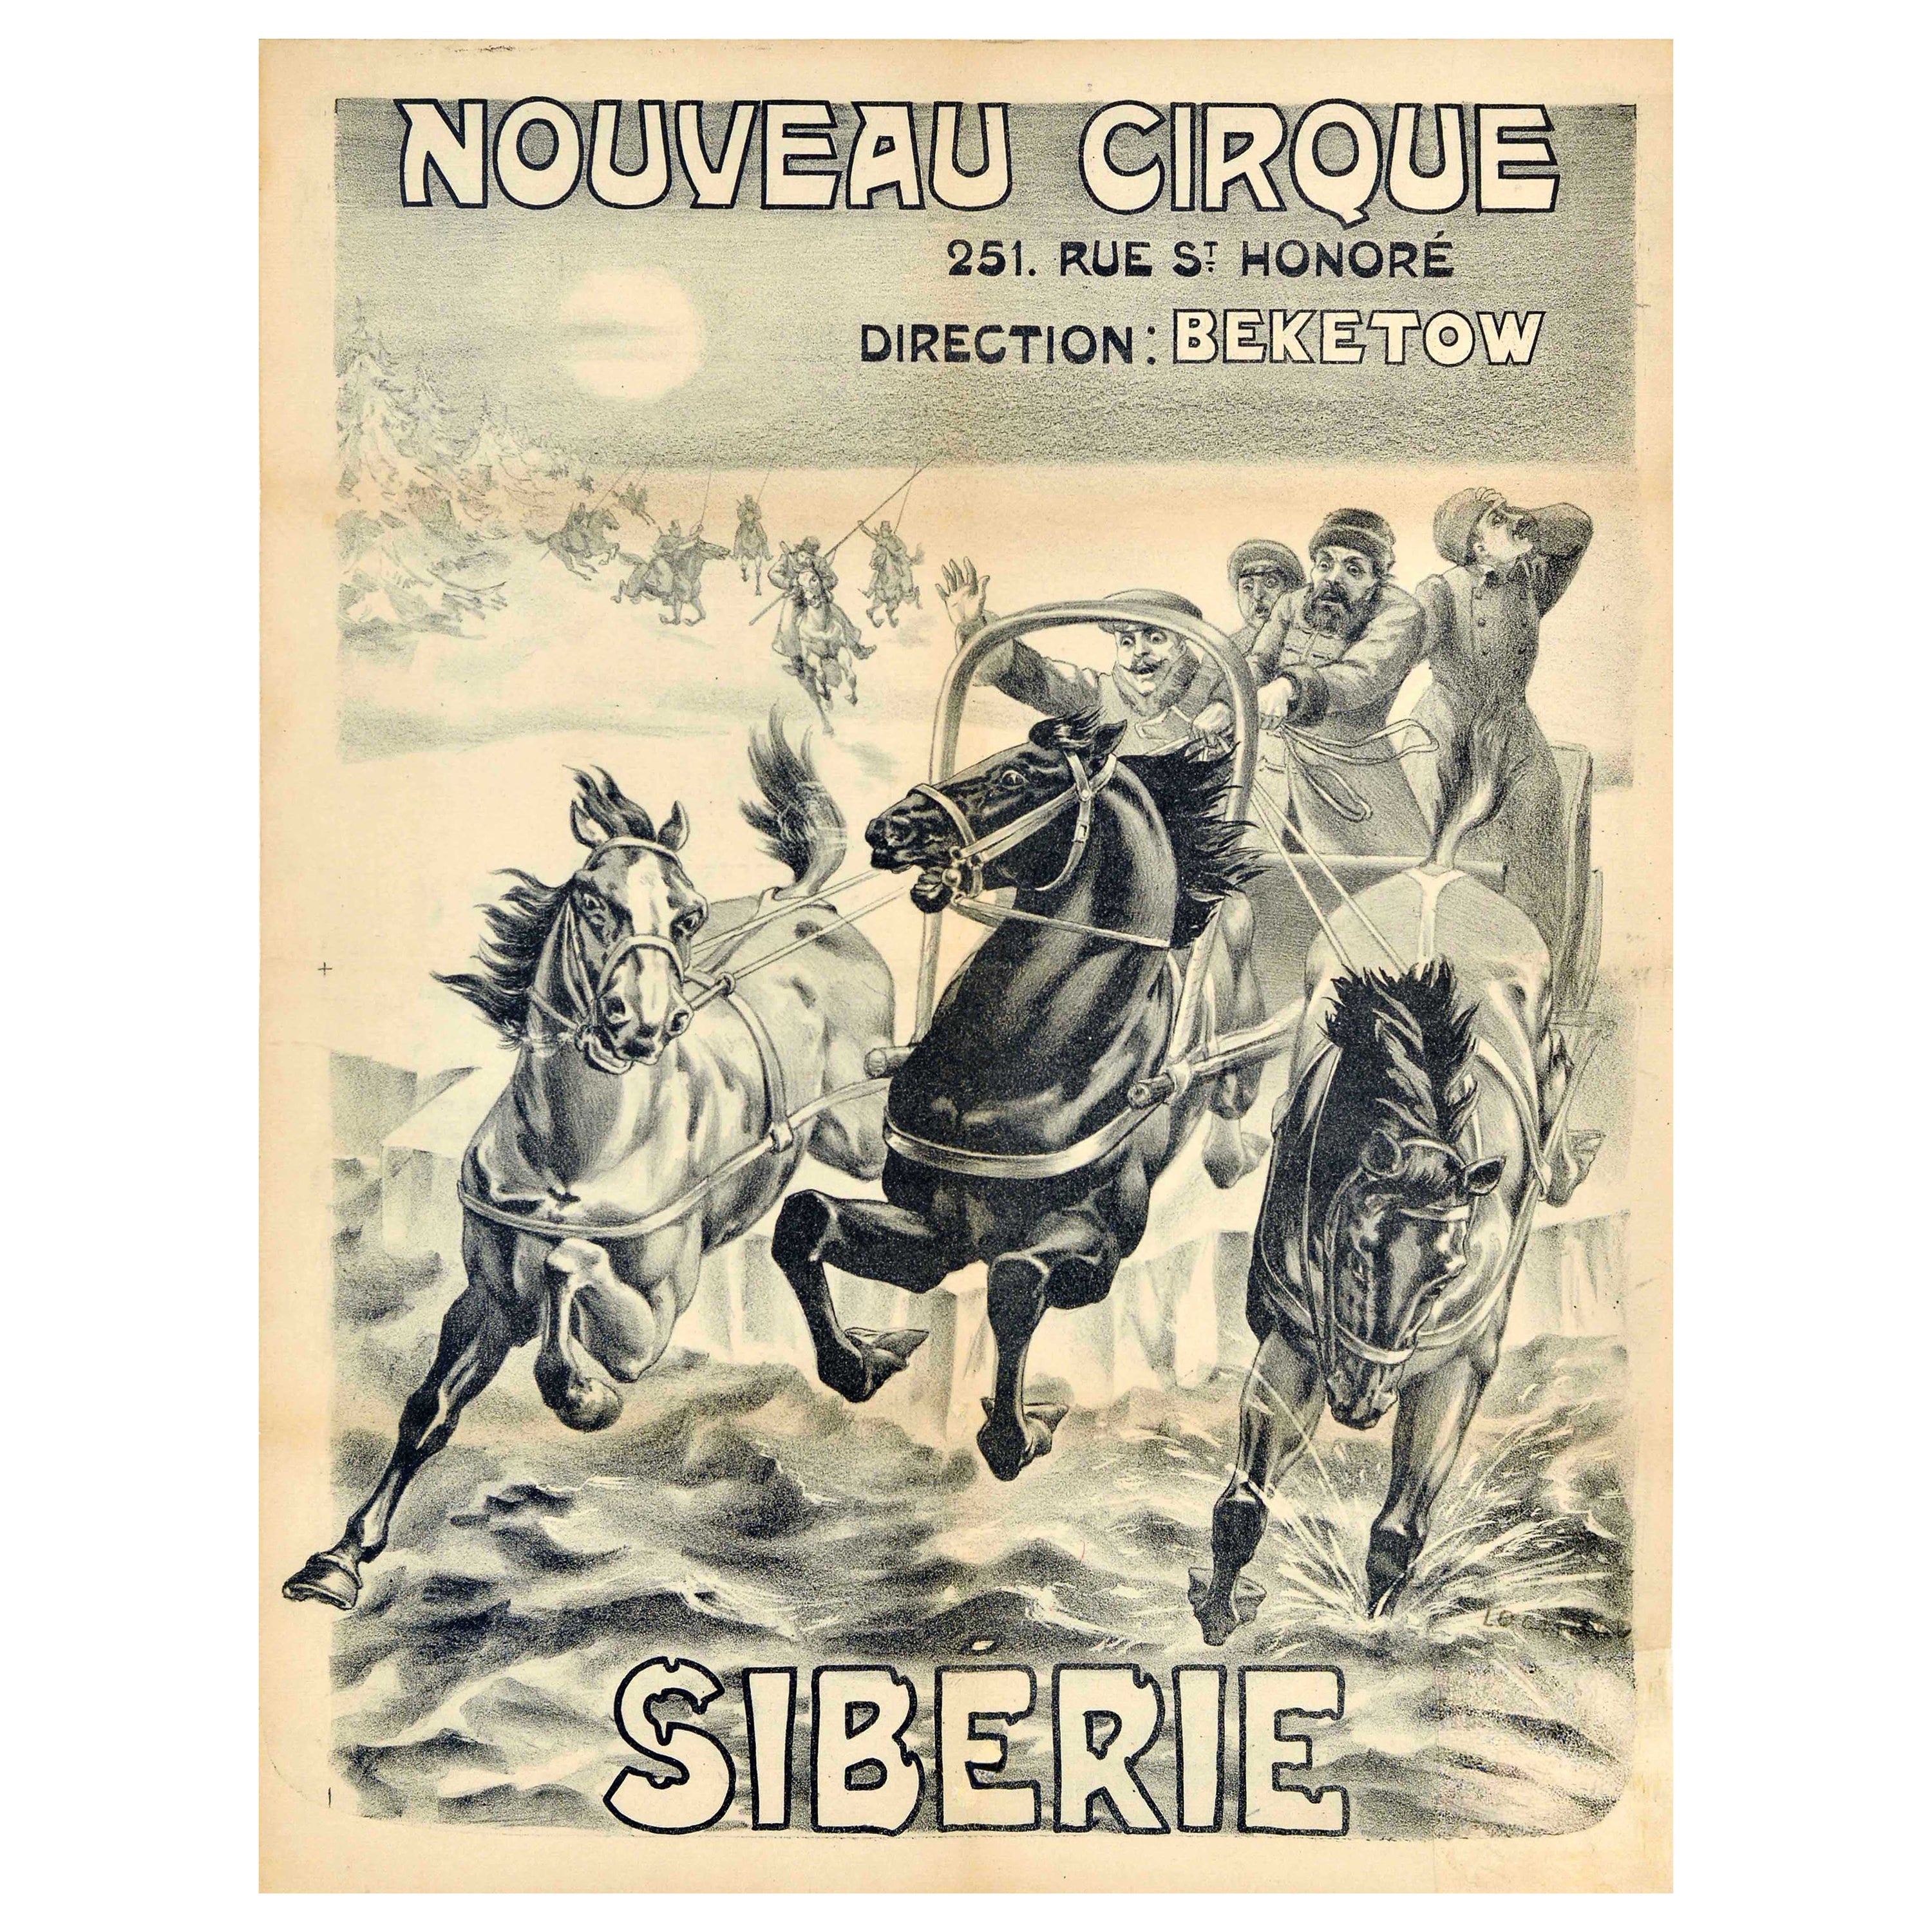 Original Antique Advertising Poster Nouveau Cirque Siberie Beketow Circus Show